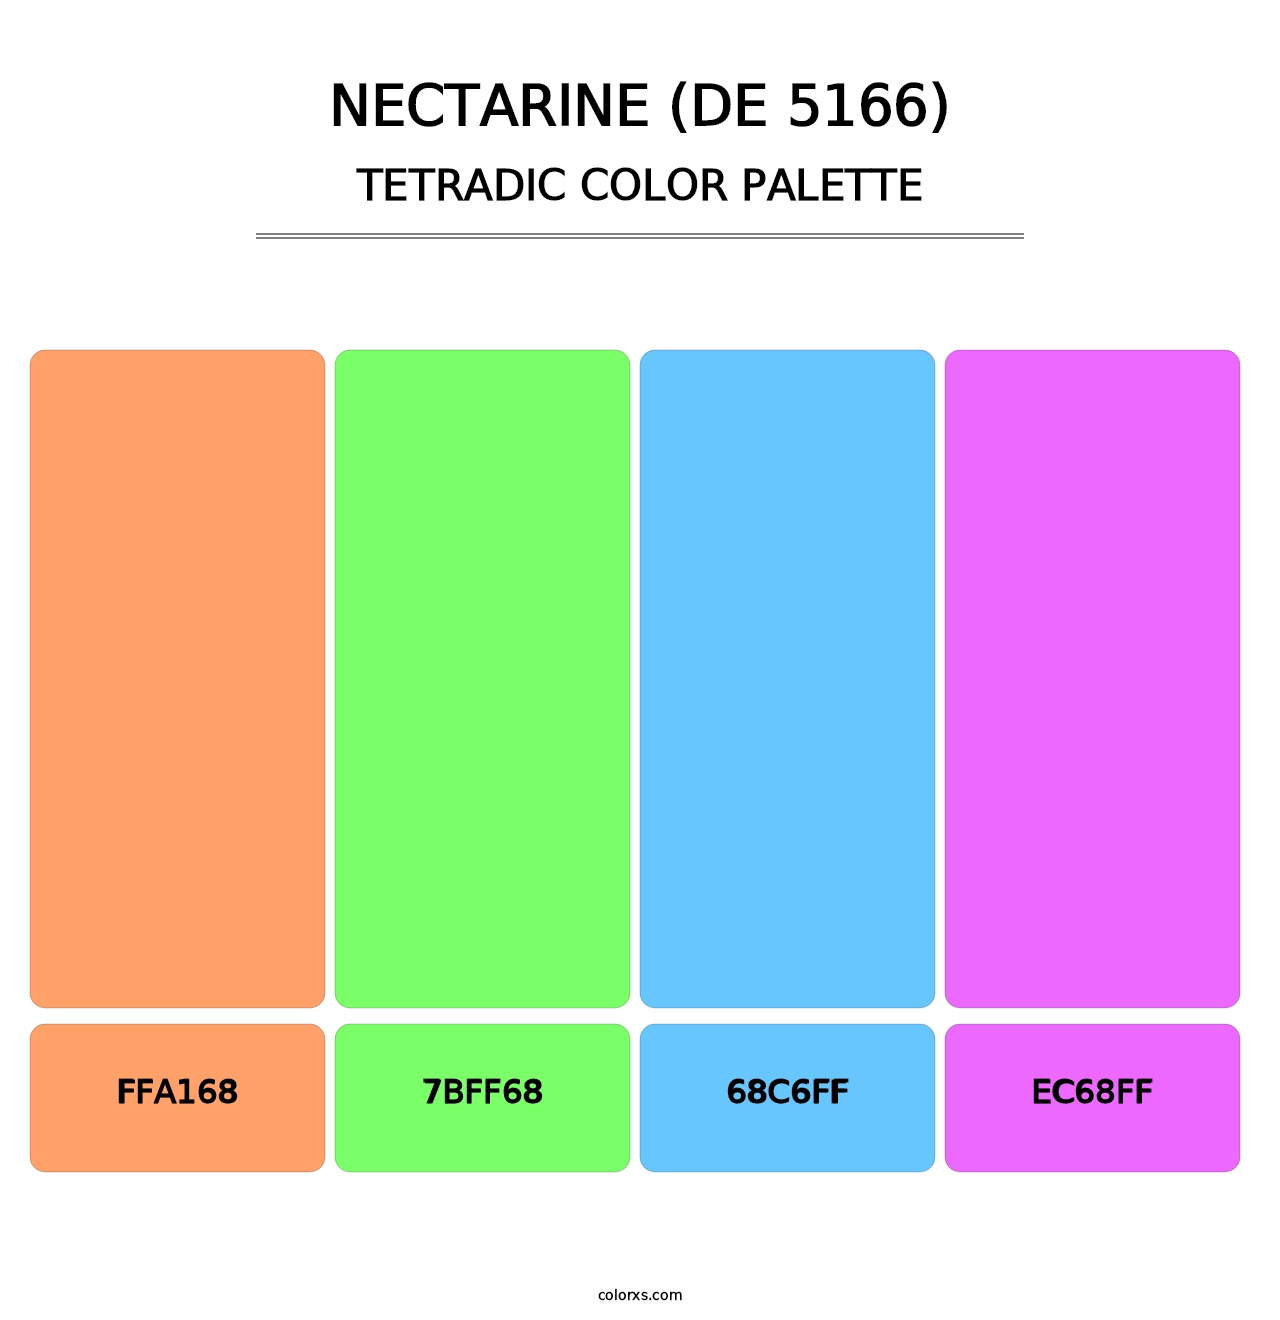 Nectarine (DE 5166) - Tetradic Color Palette